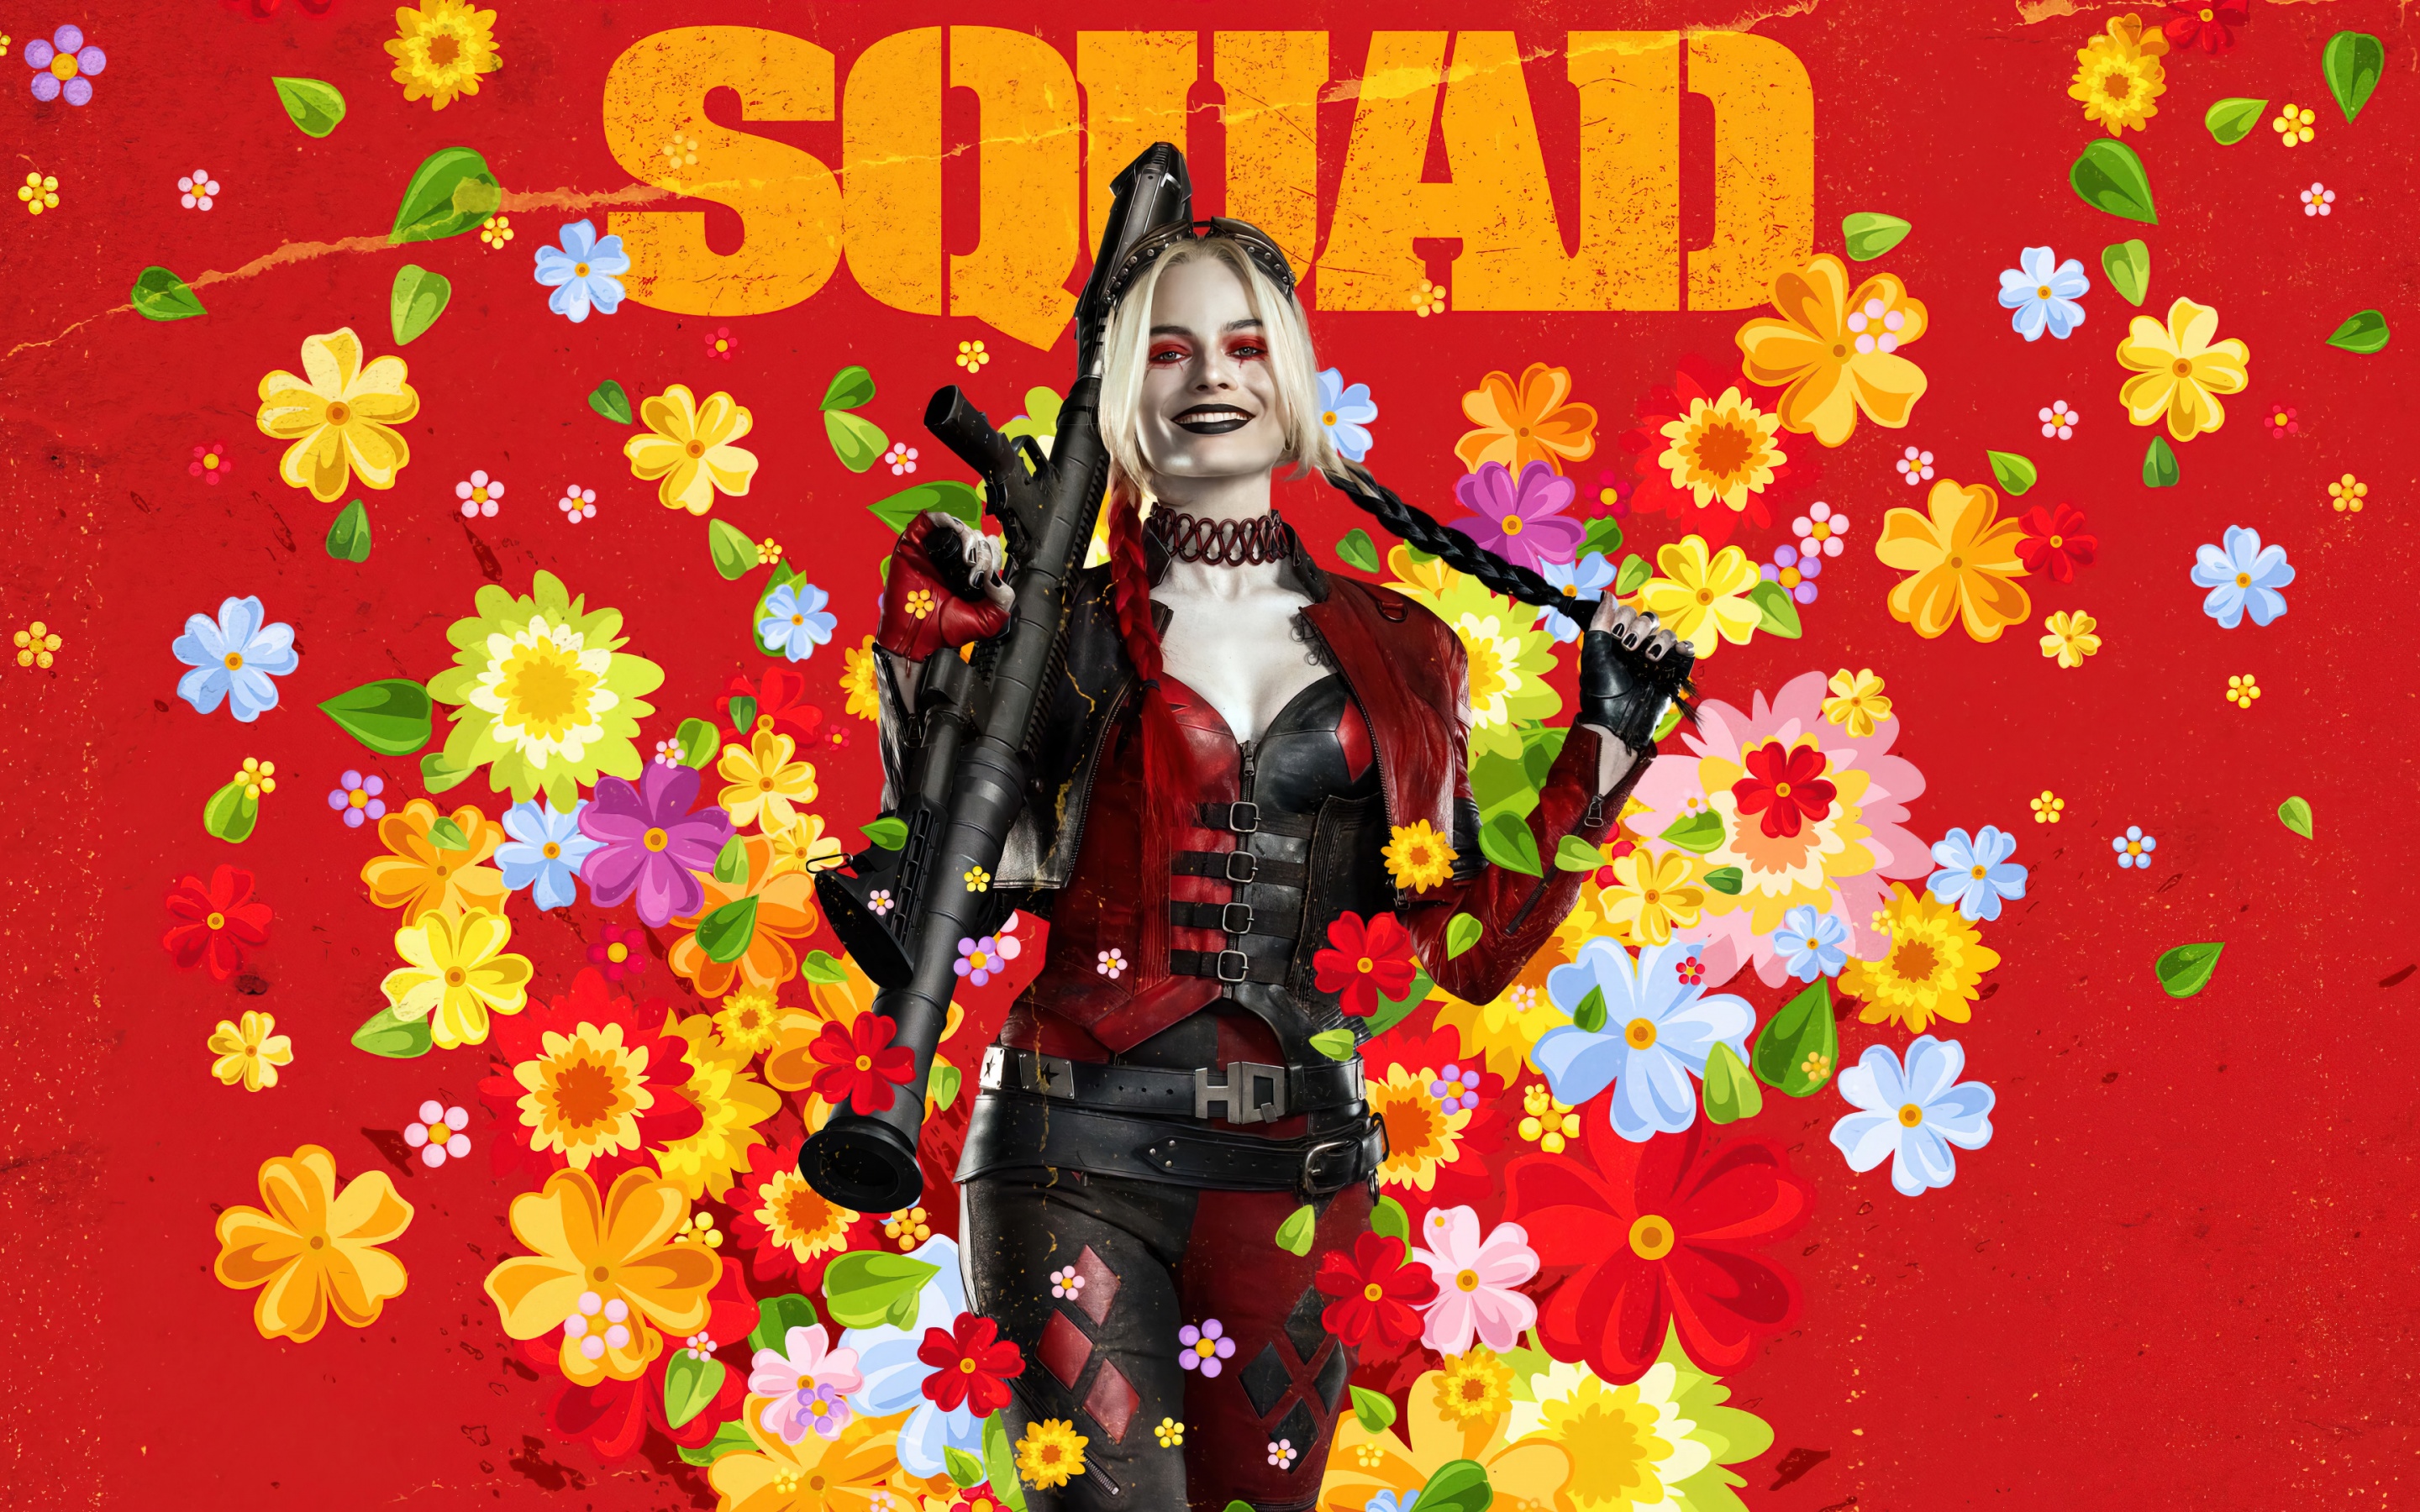 Harley Quinn 4K Wallpaper, Margot Robbie, The Suicide Squad, 2021